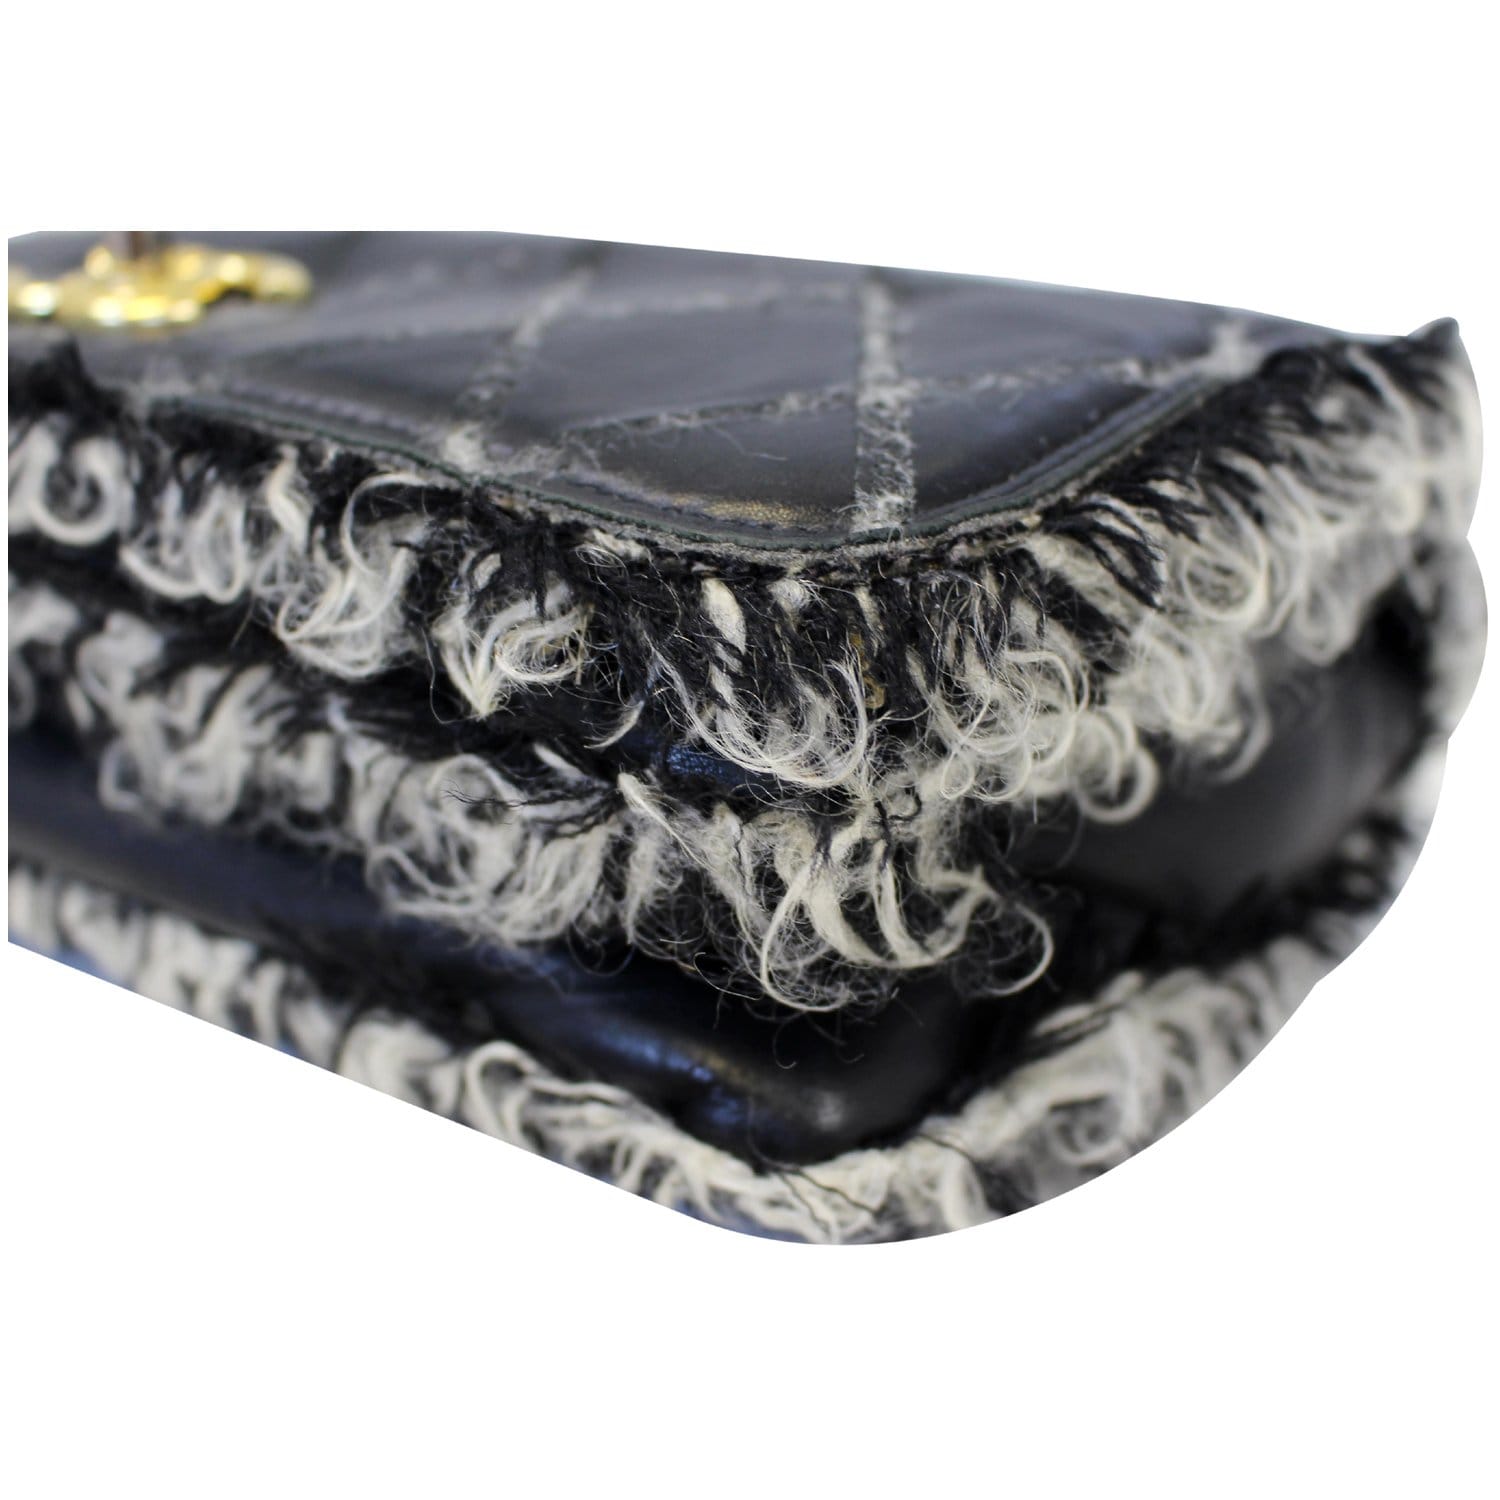 Chanel Tweed Leather Flap Bag